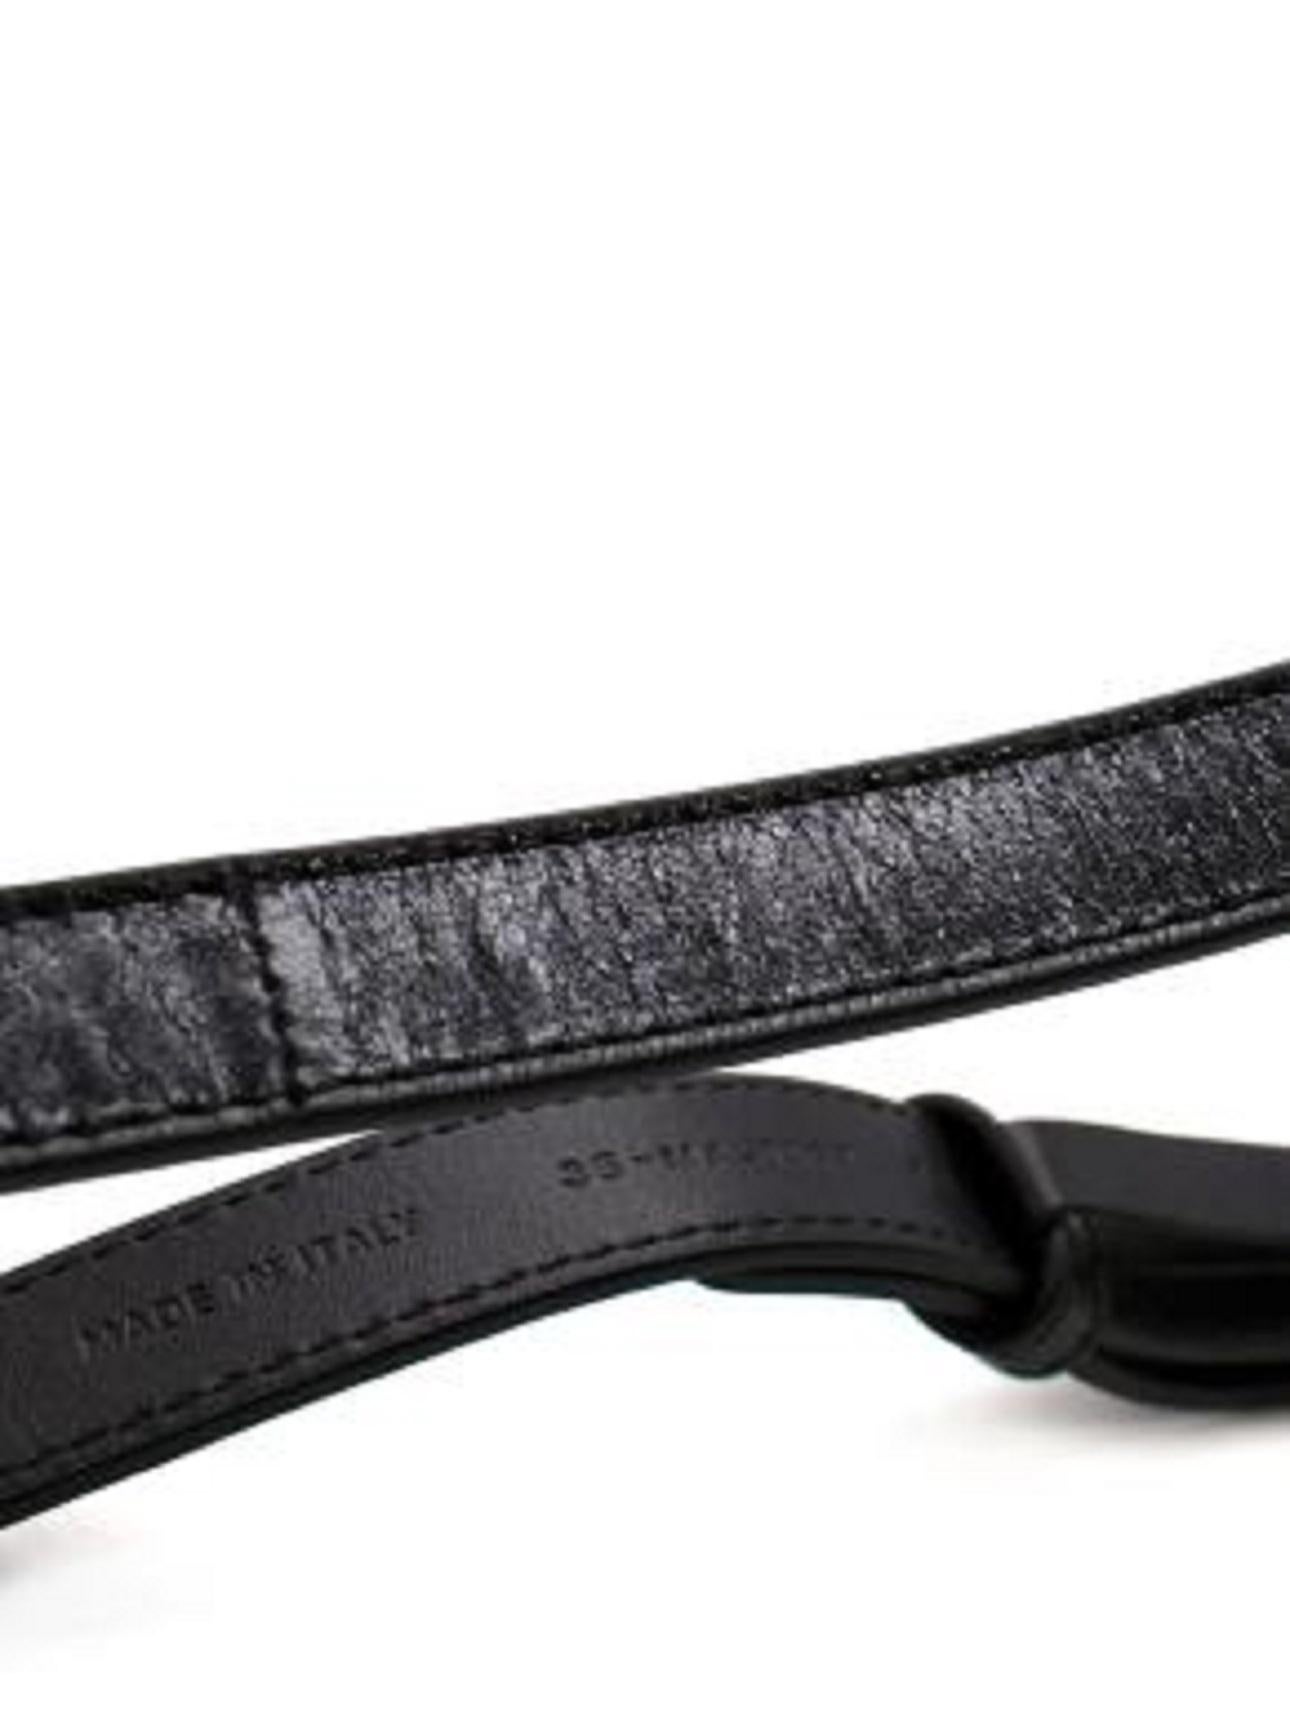 Dior Black Leather Montaigne Belt - Size 70 For Sale 2